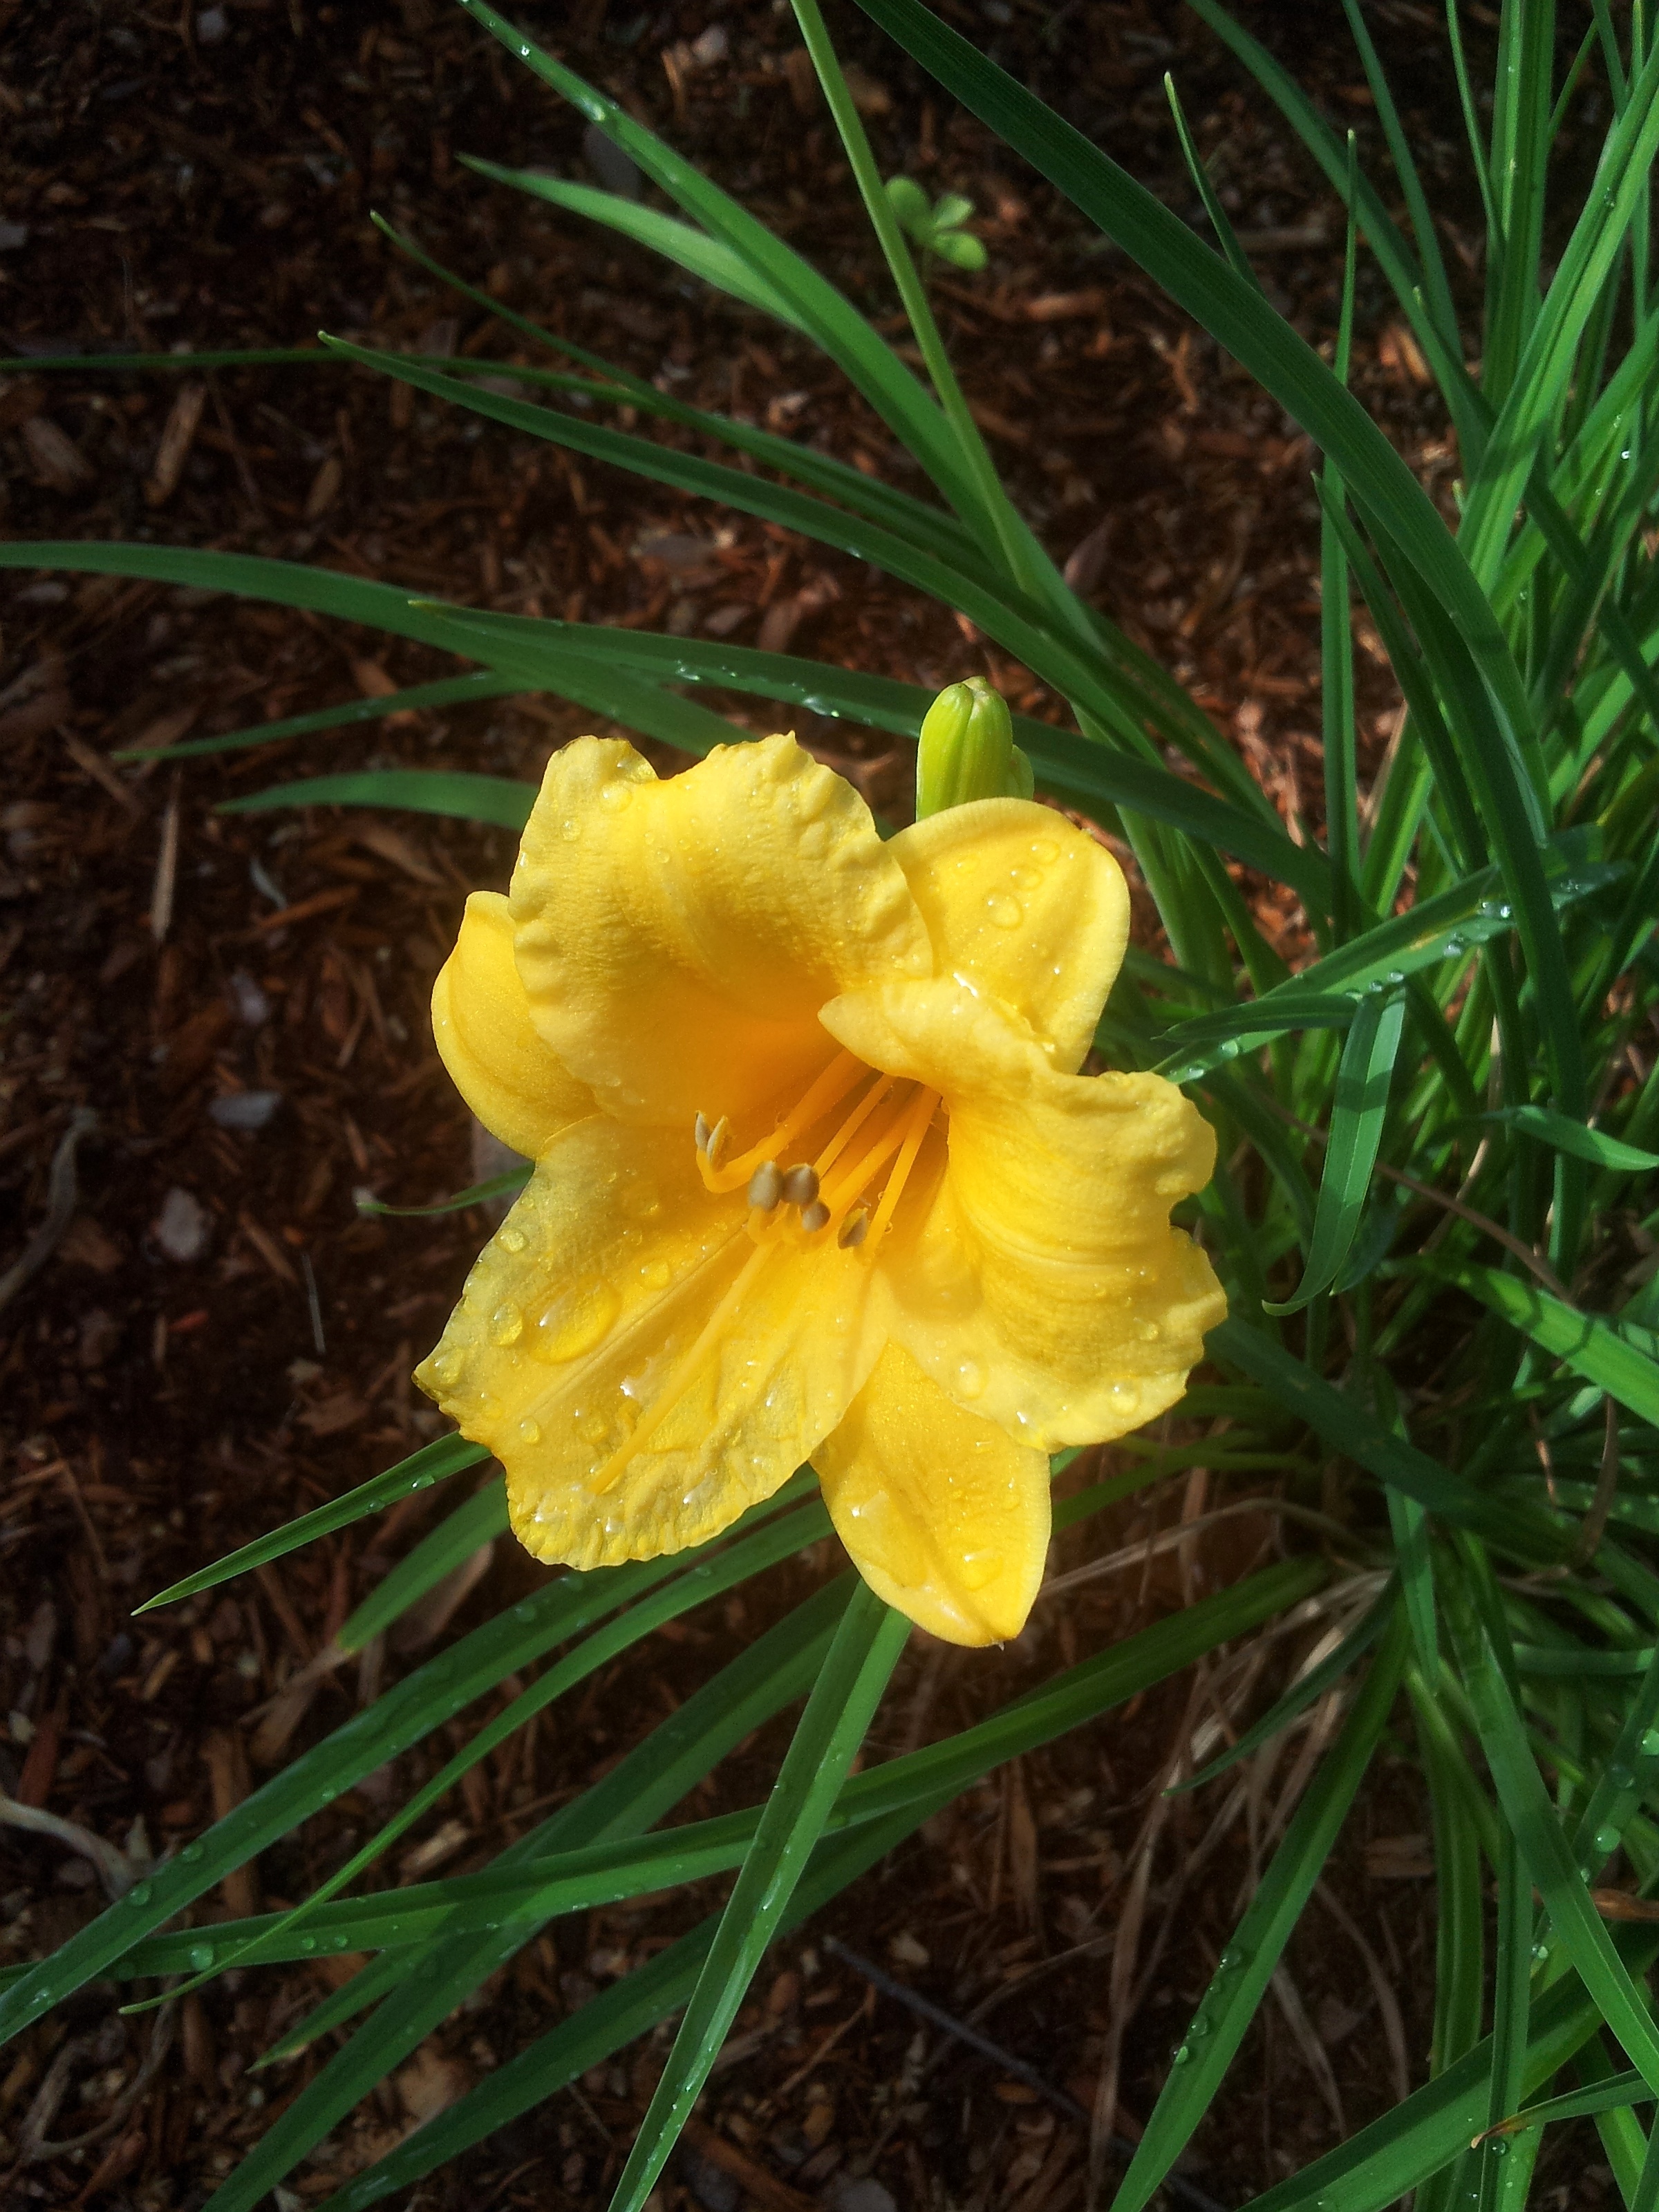 Yellow daylily after the rain #2